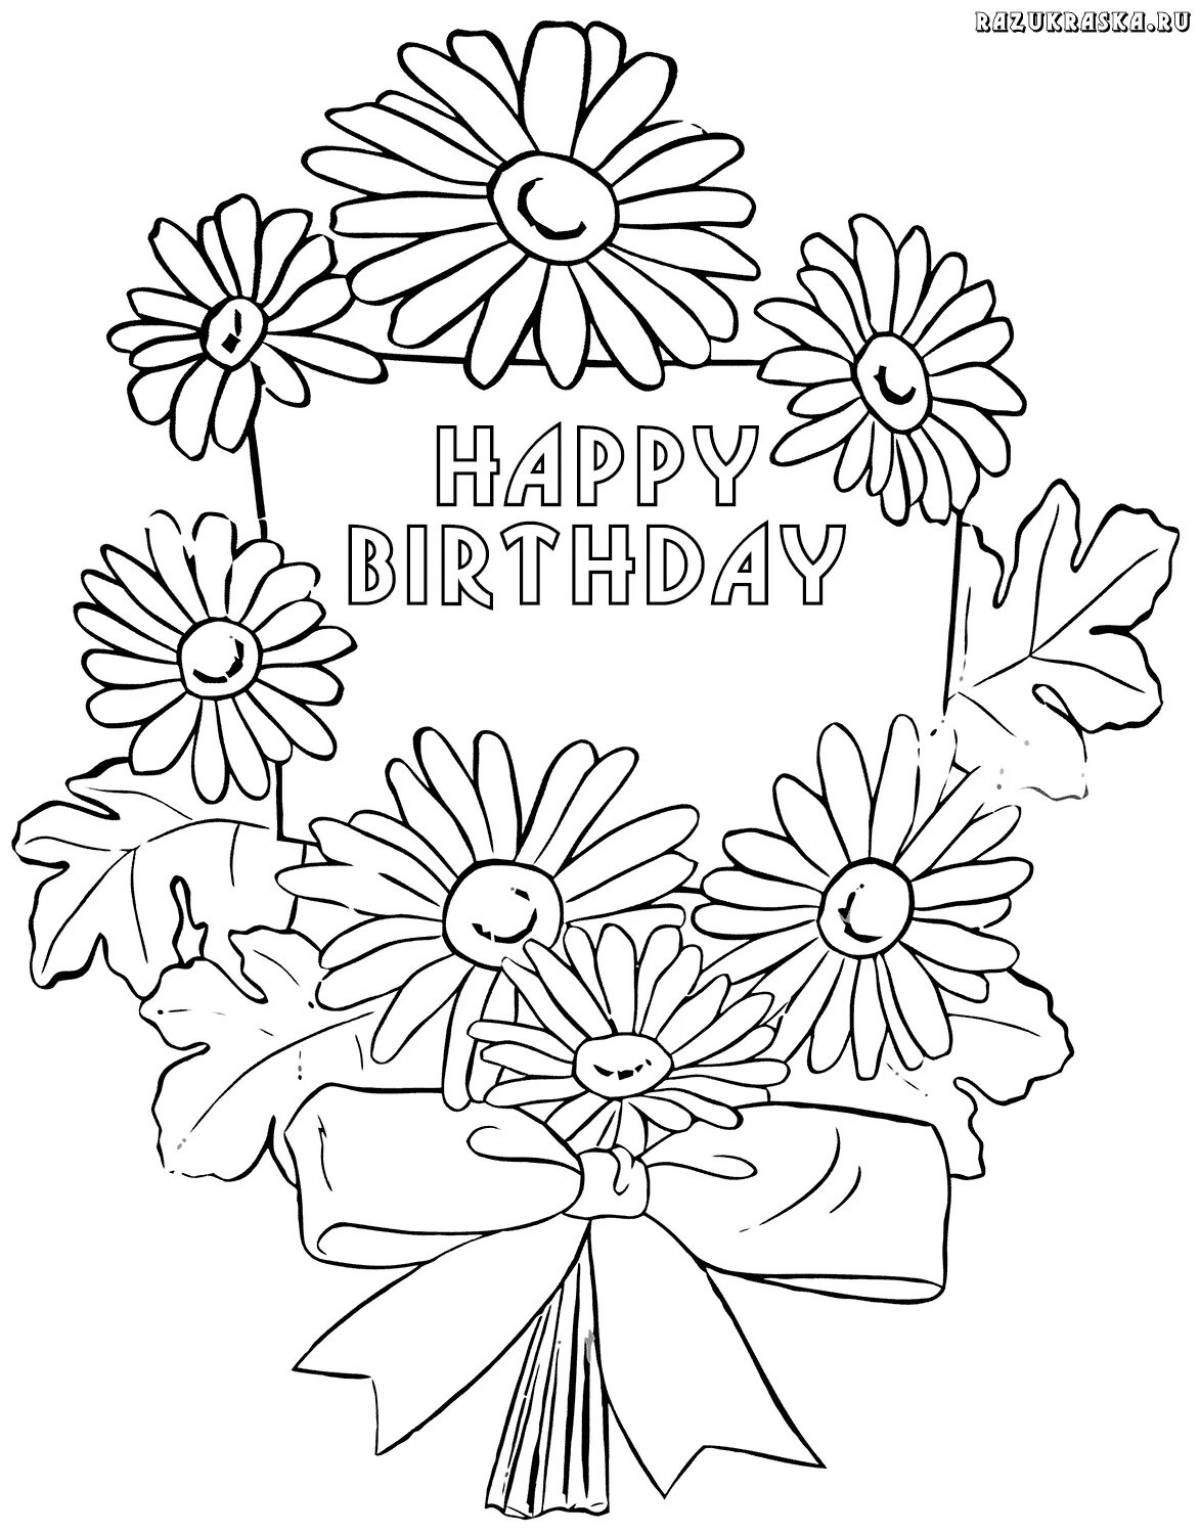 Happy birthday teacher coloring book